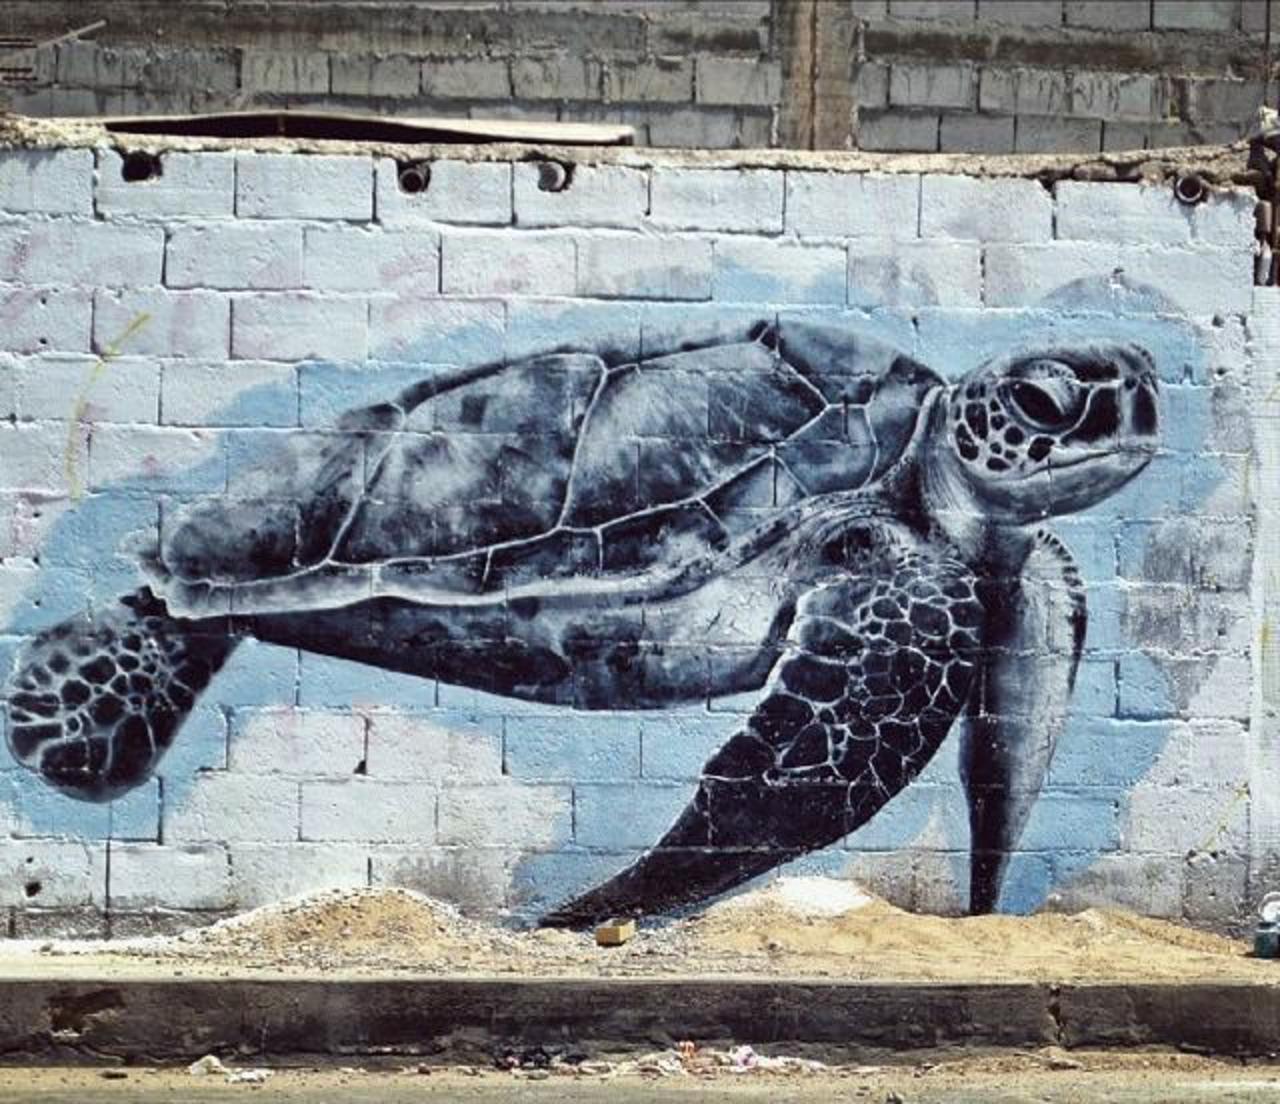 RT @nenimillan: "@GoogleStreetArt: Nature in Street Art by Joe Nadie in Lima, Peru 

#art #graffiti #mural #streetart http://t.co/6wMxolVp4e" @CICTMAR